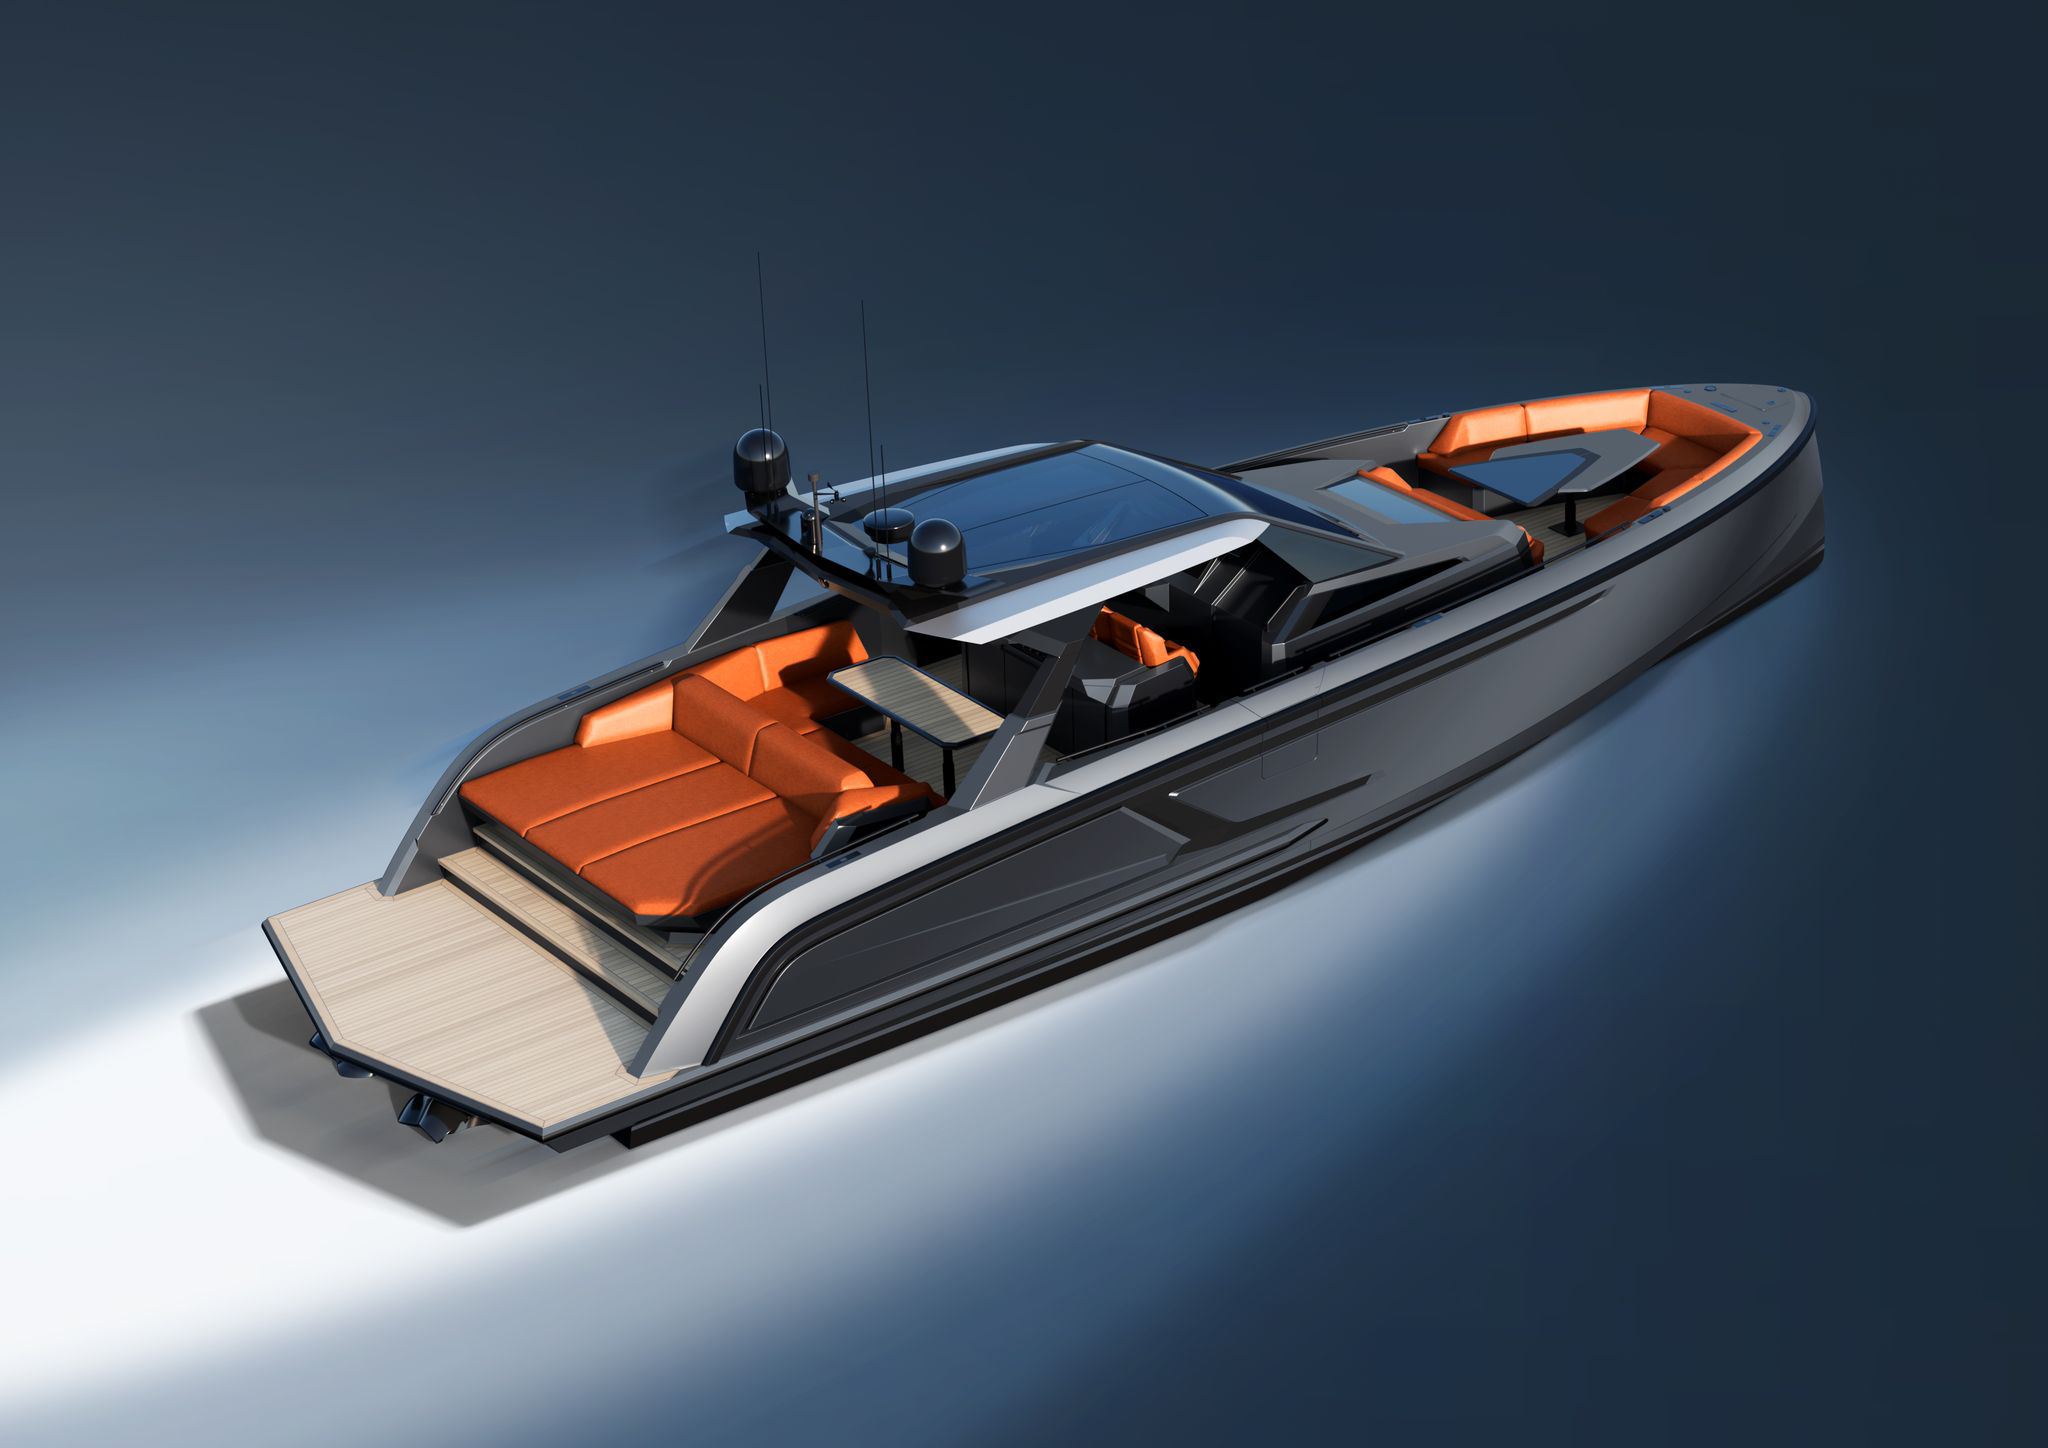 vanquish-VQ55-no-motors-orange-rear-side-view